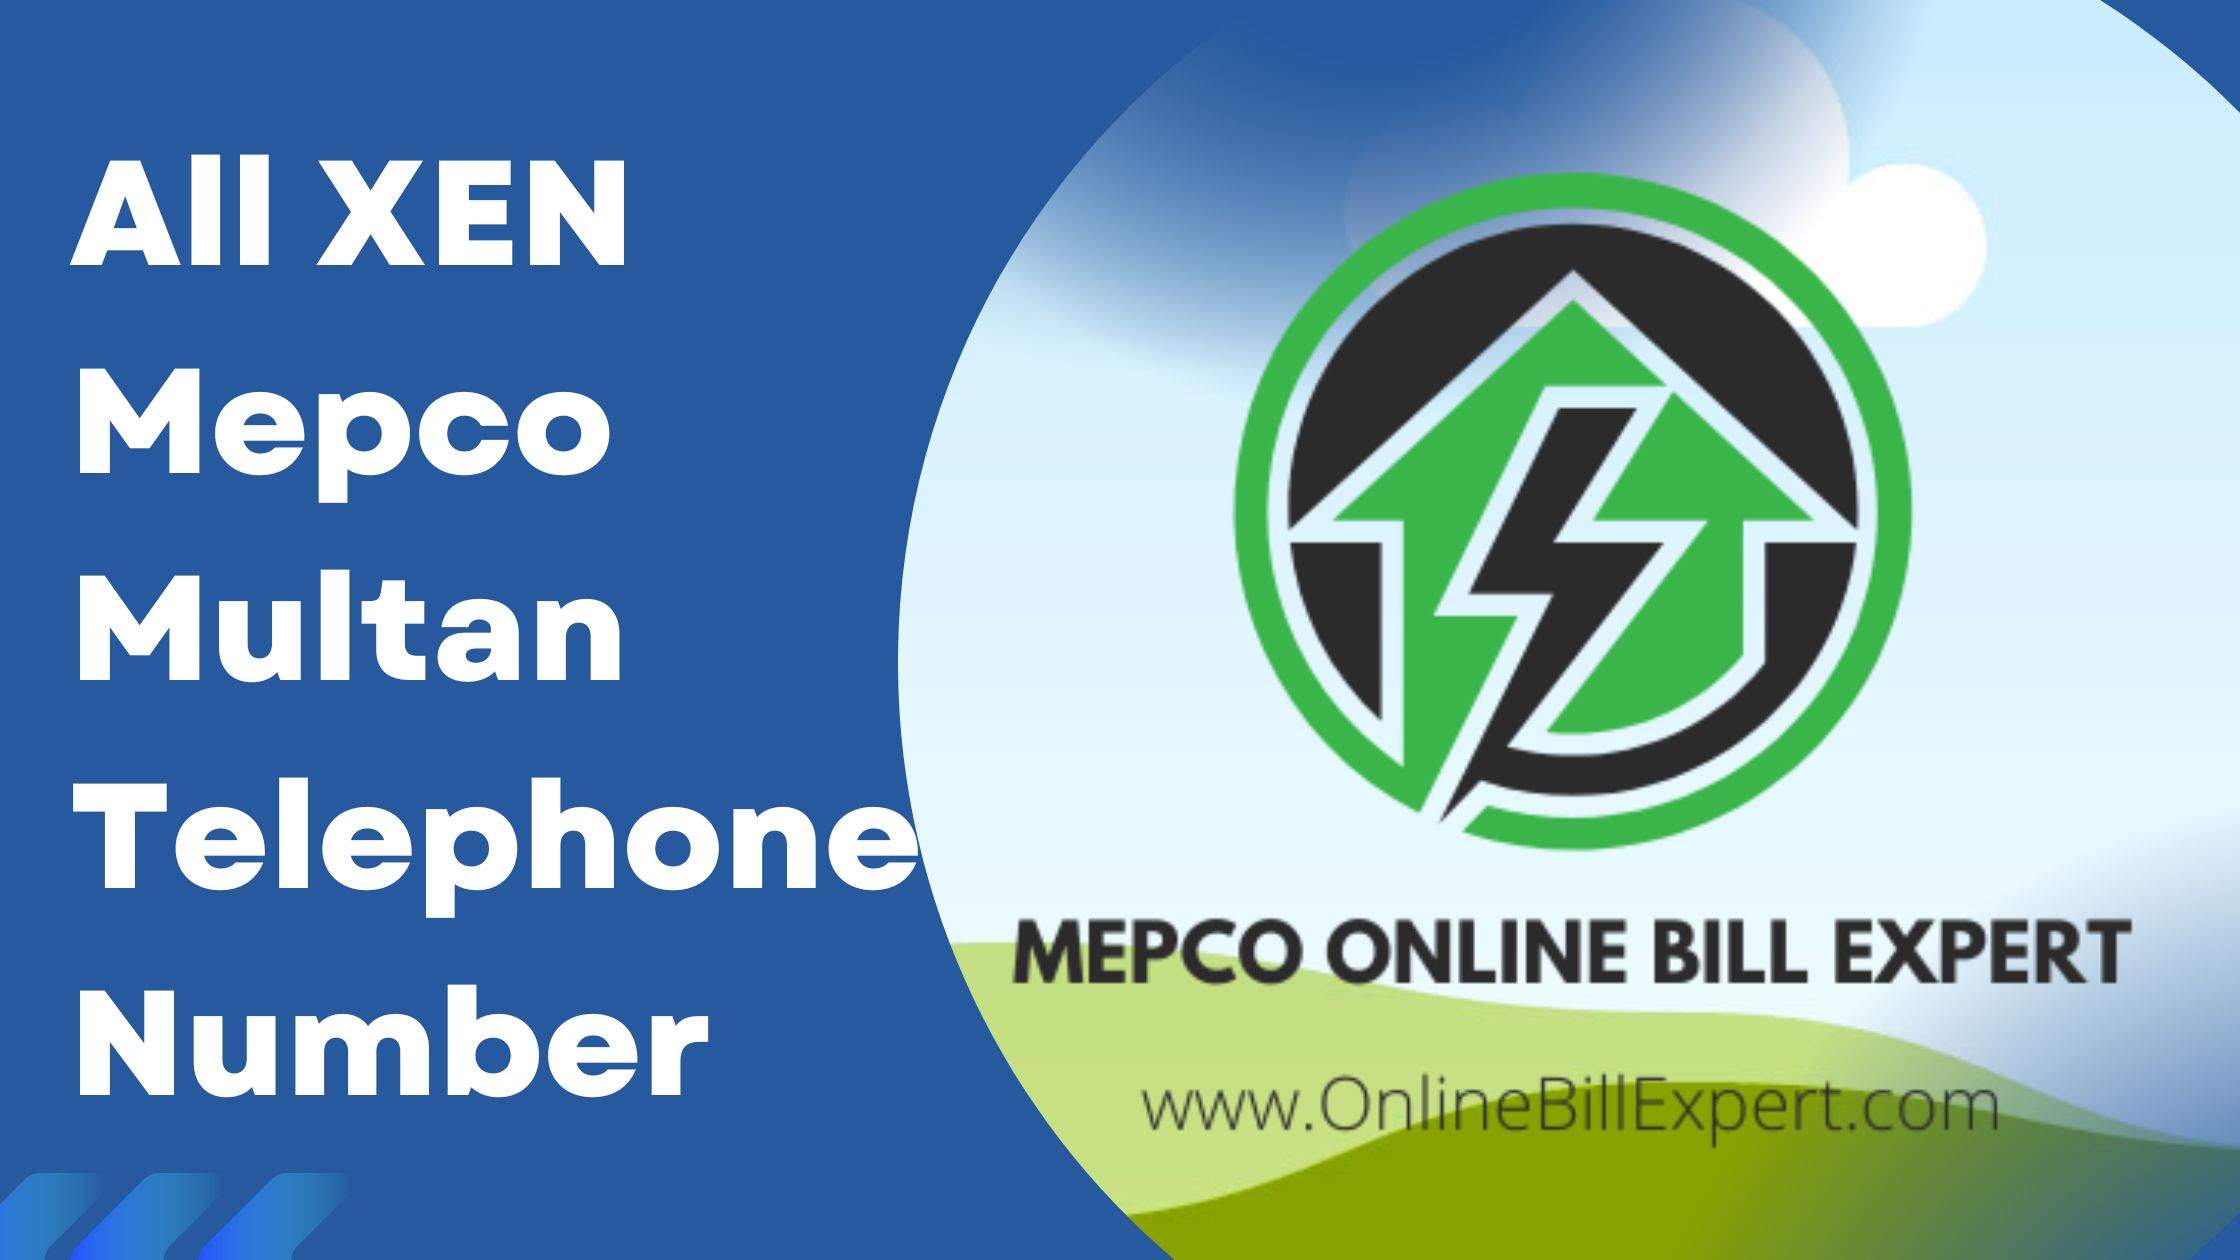 XEN Mepco Multan Telephone Number